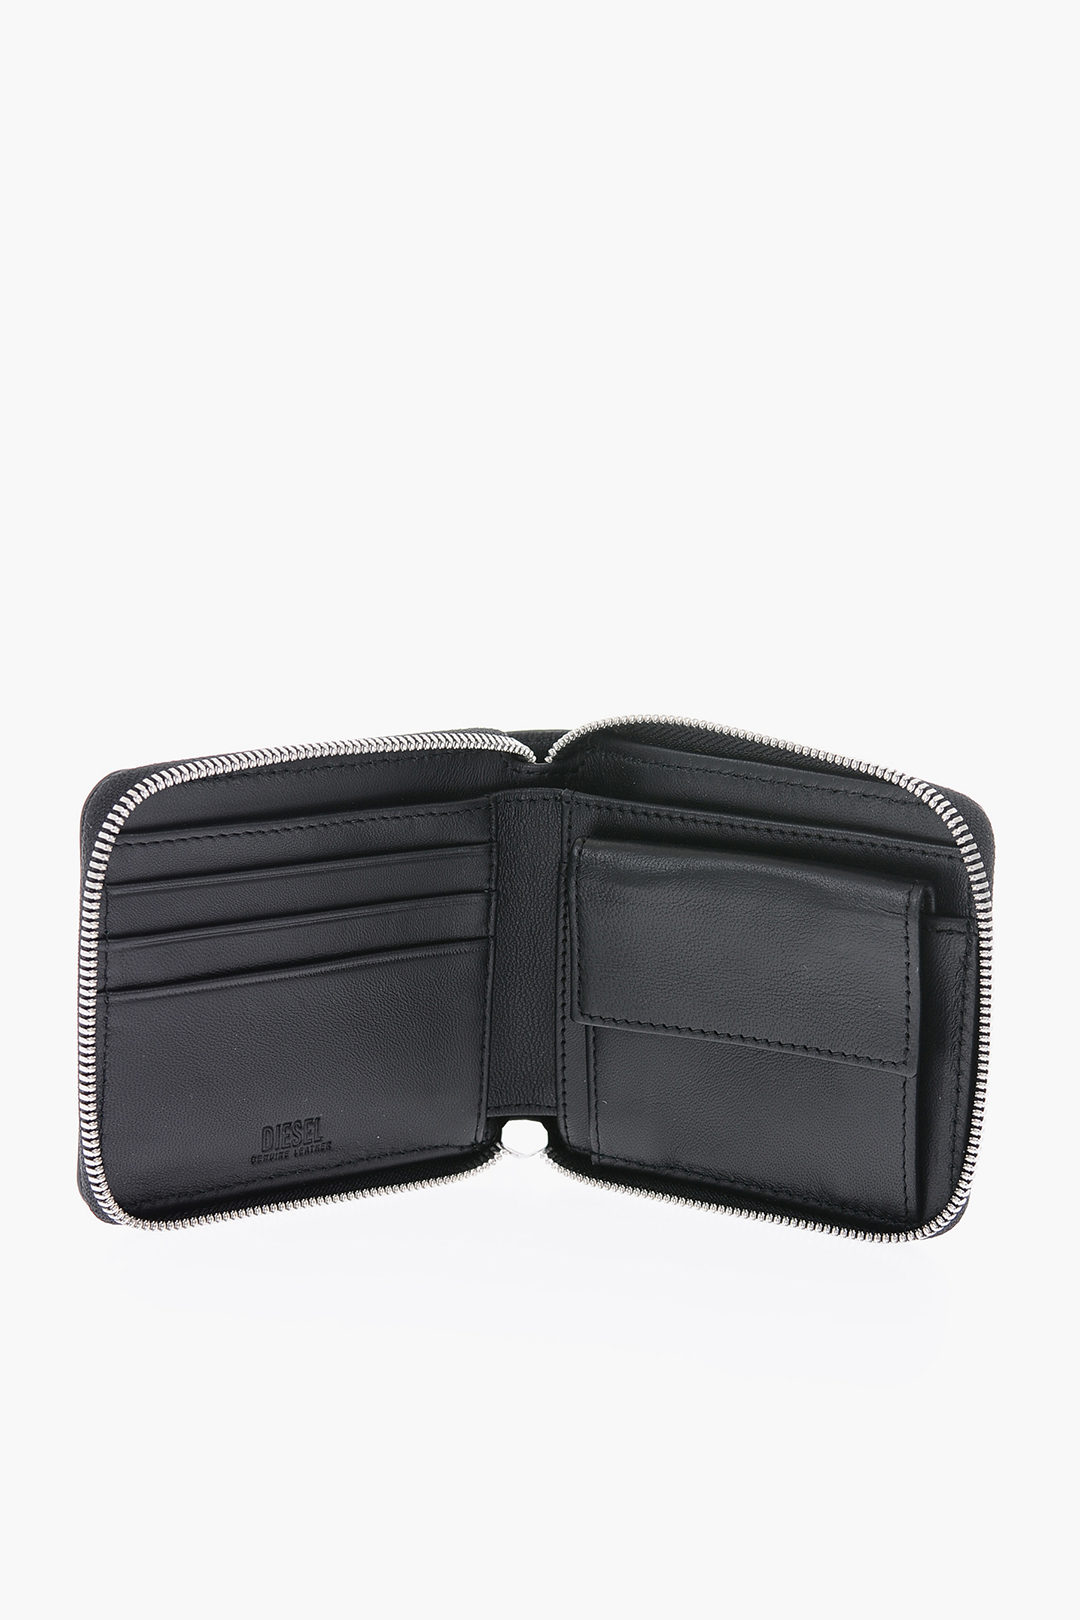 Diesel Patent Leather CLYN HIRESH XS ZIPP Wallet men - Glamood Outlet